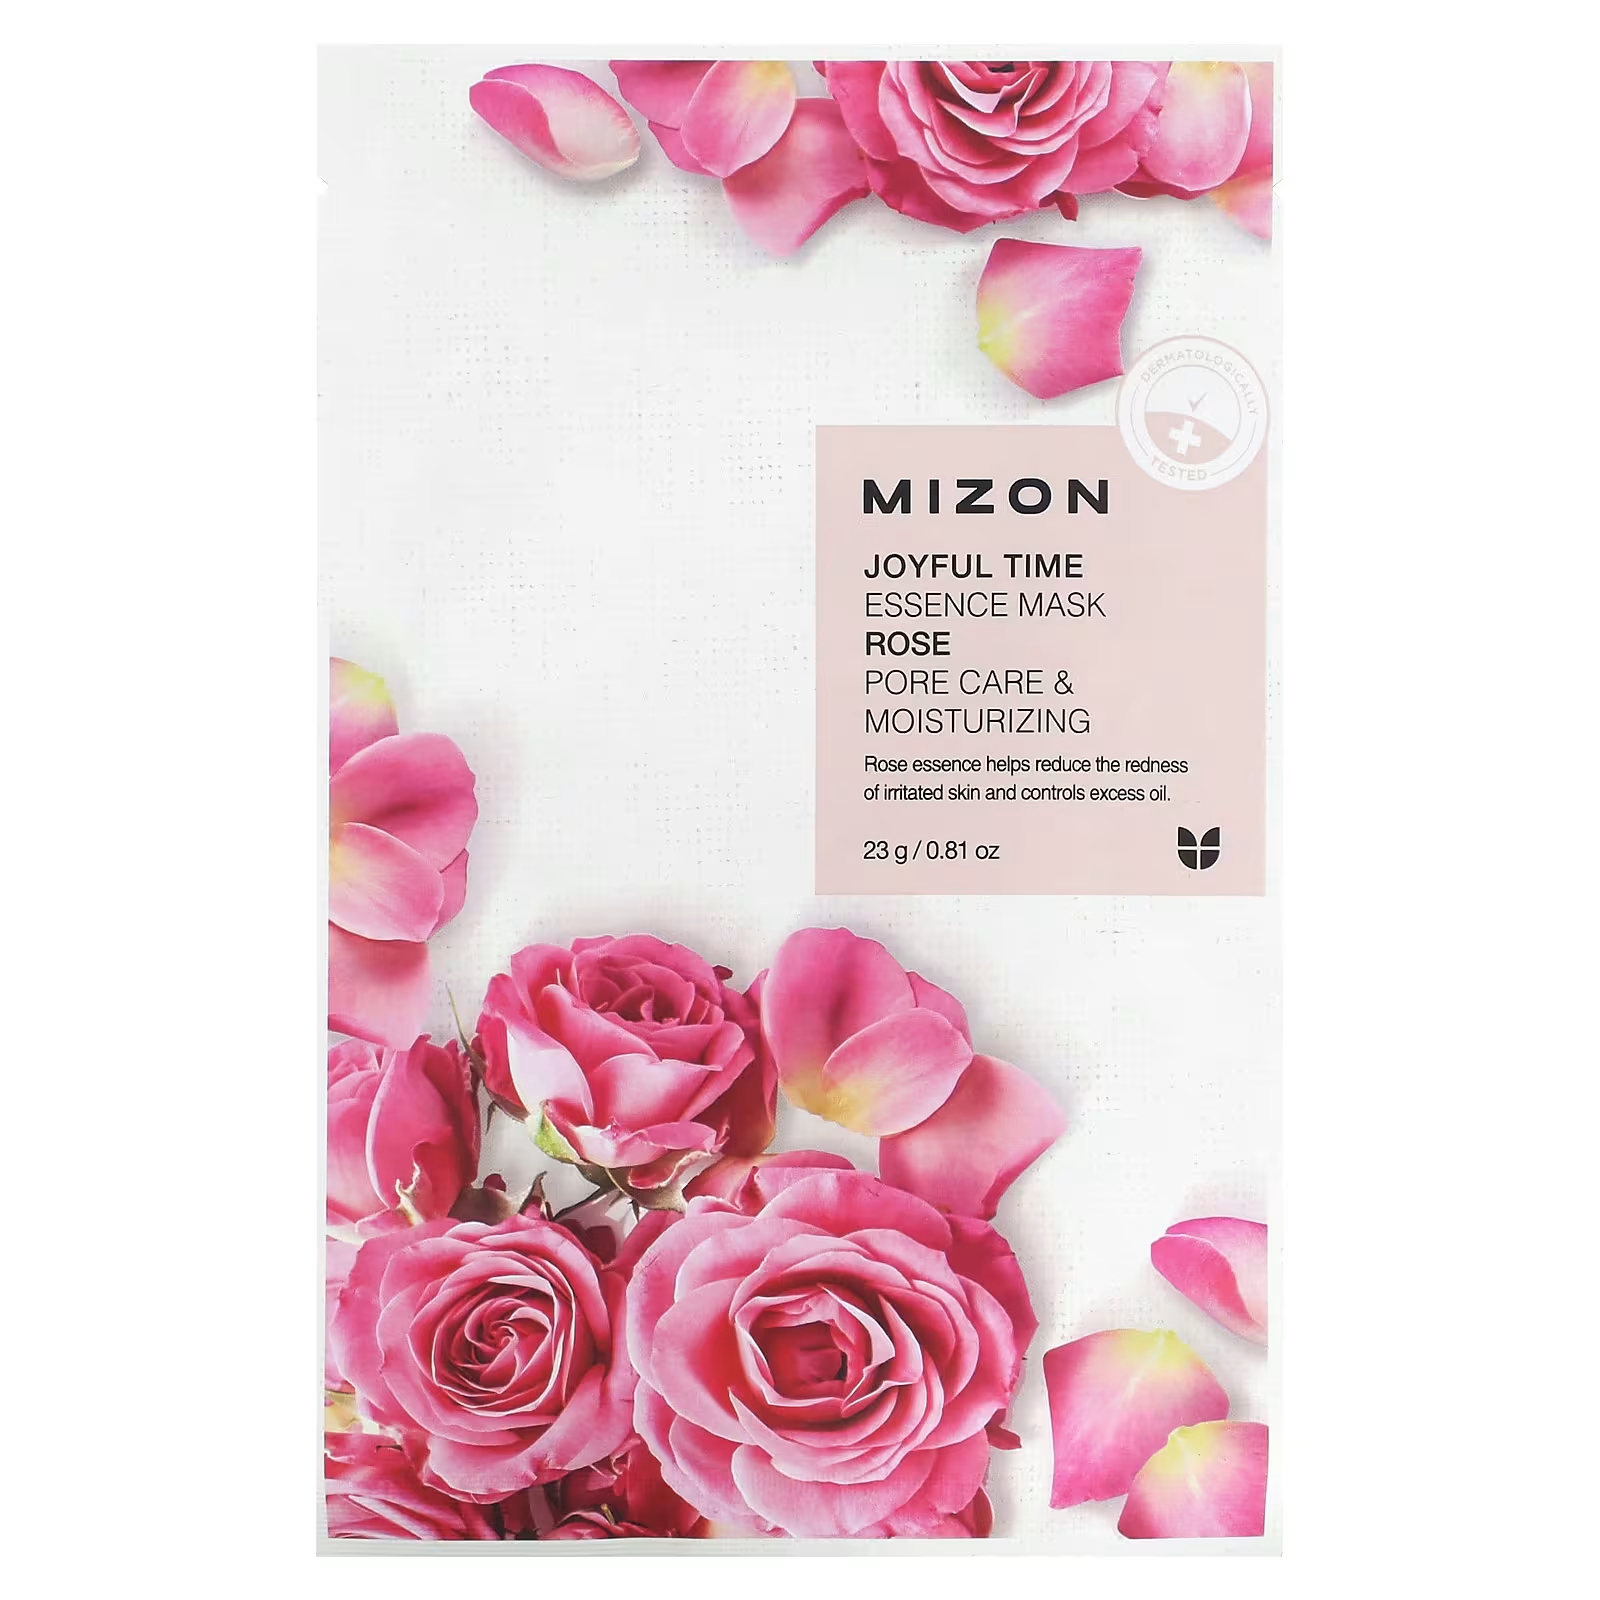 Mizon Joyful Time Essence Beauty Mask Rose, 1 лист, 0,81 унции (23 г) missha time revolution the first essence beauty mask 1 шт 30 г 1 05 унции